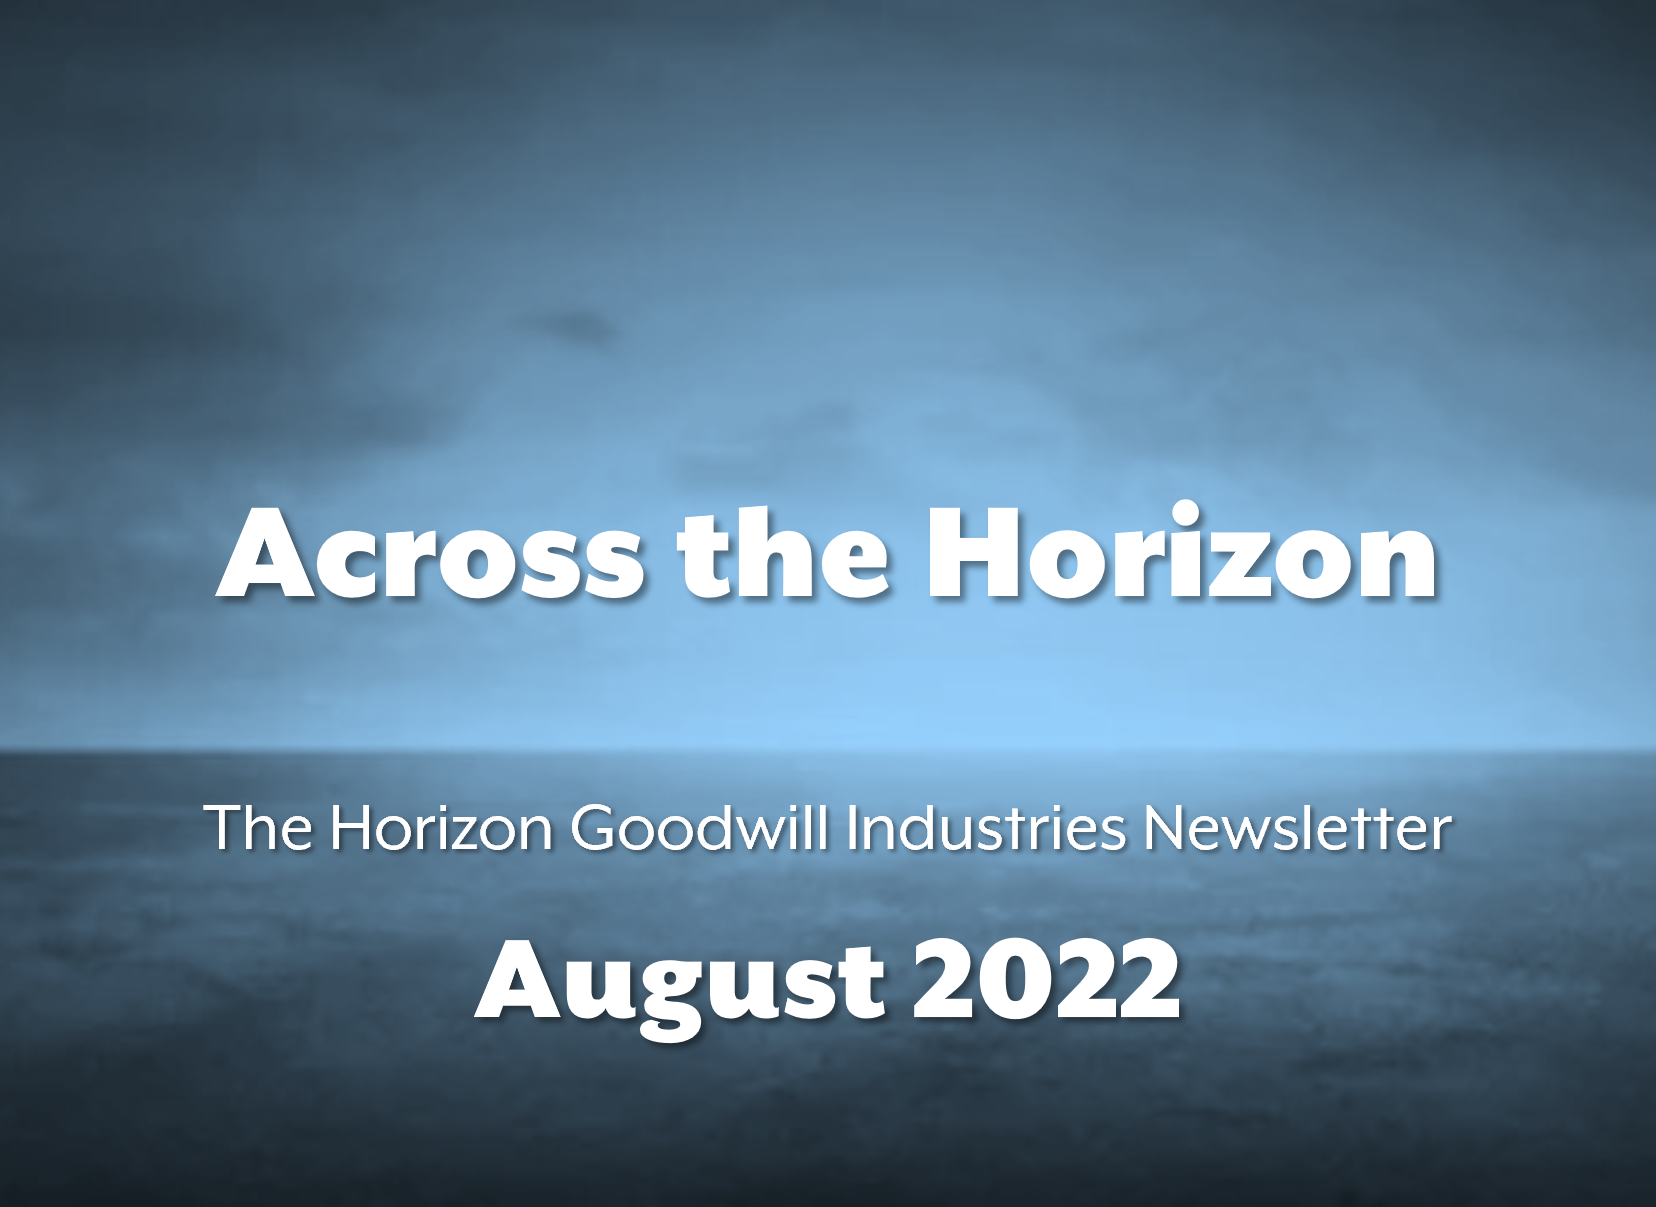 August 2022 Newsletter